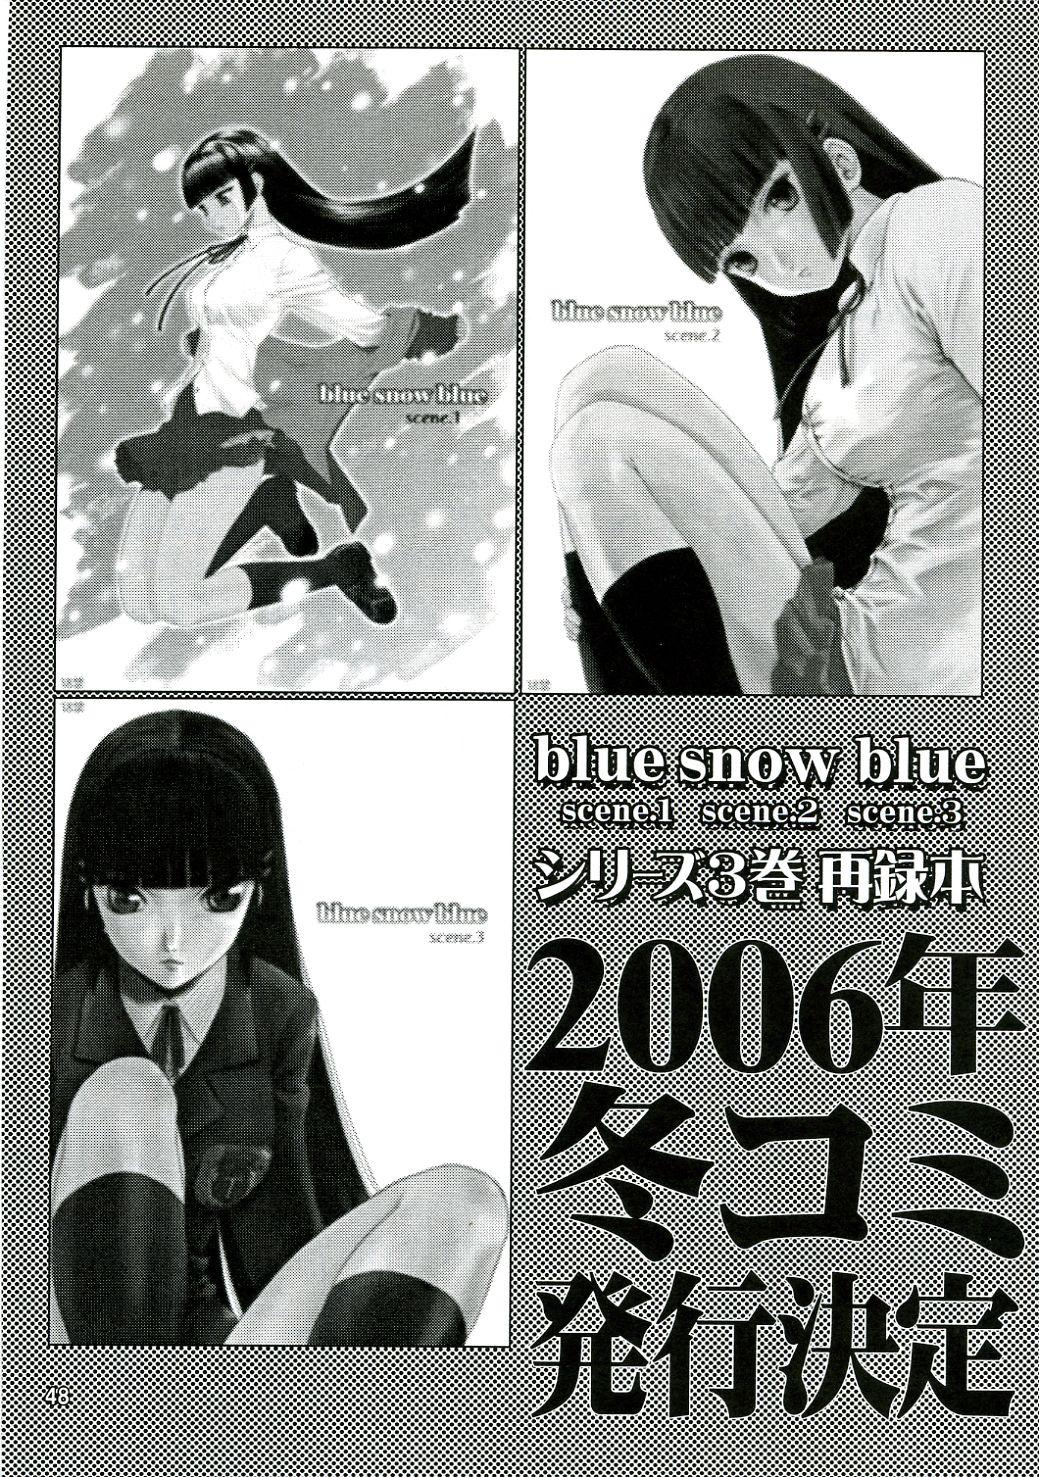 blue snow blue - scene.4 46